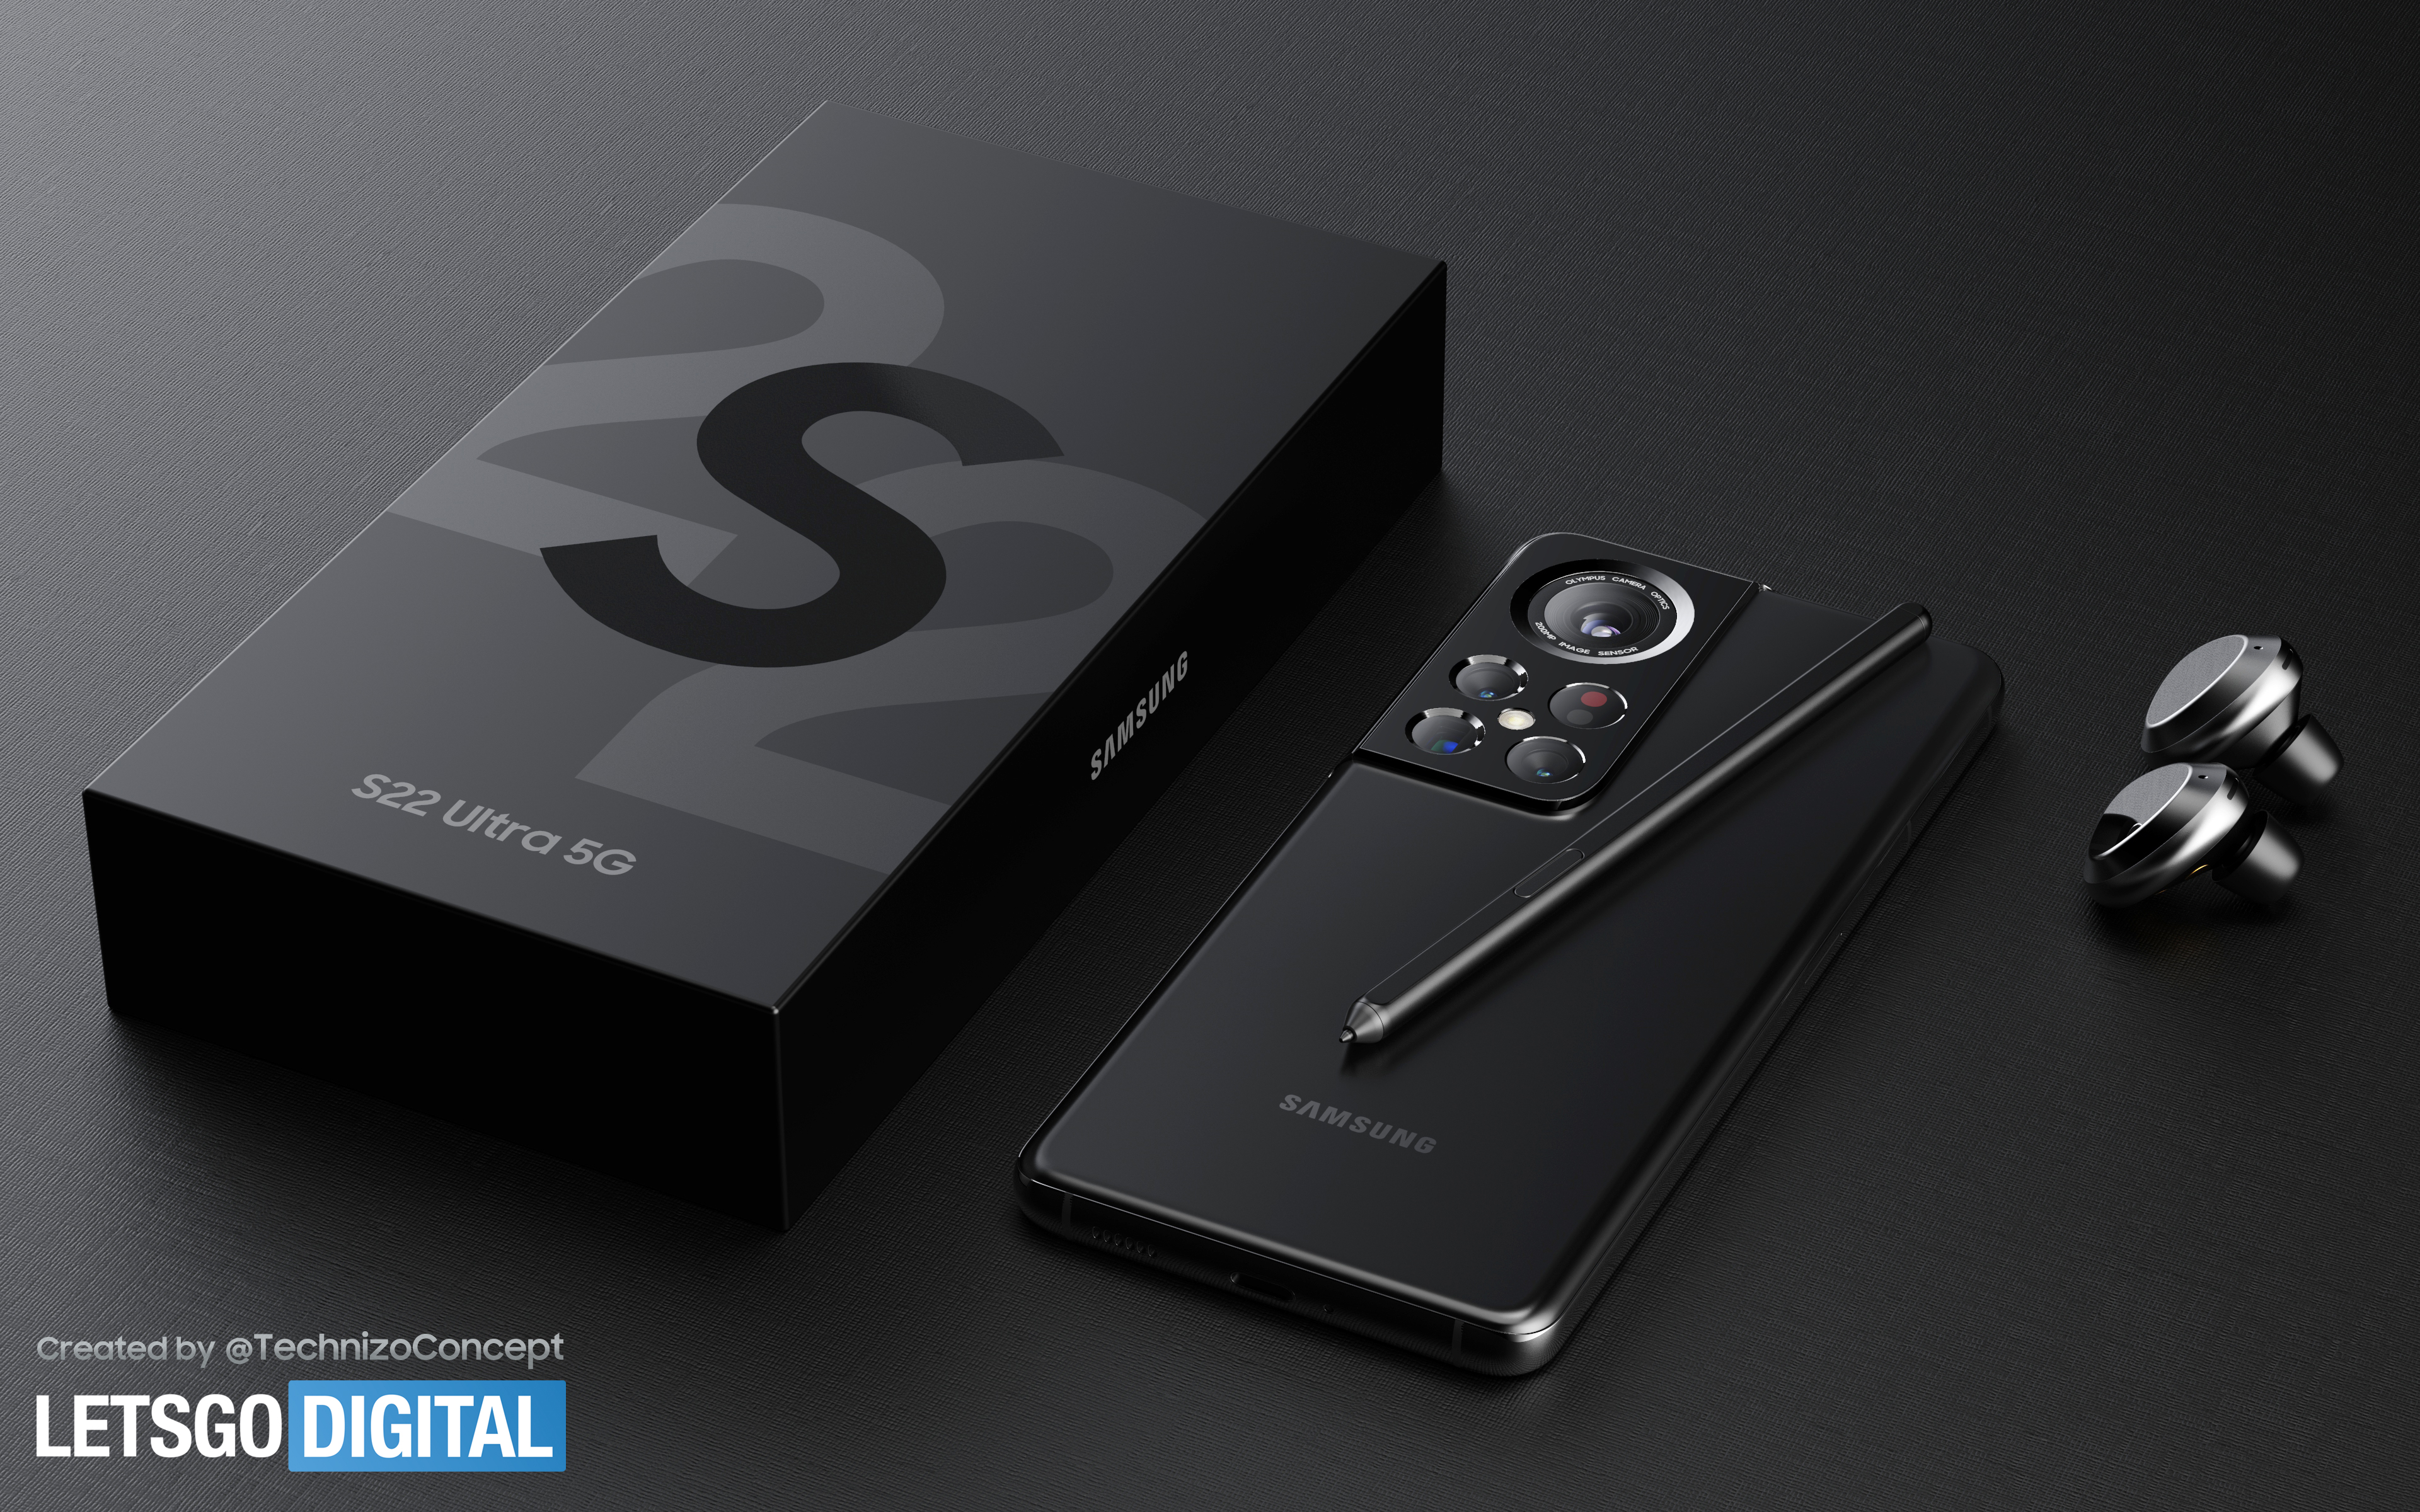 Samsung Galaxy S21 Ultra key specs revealed